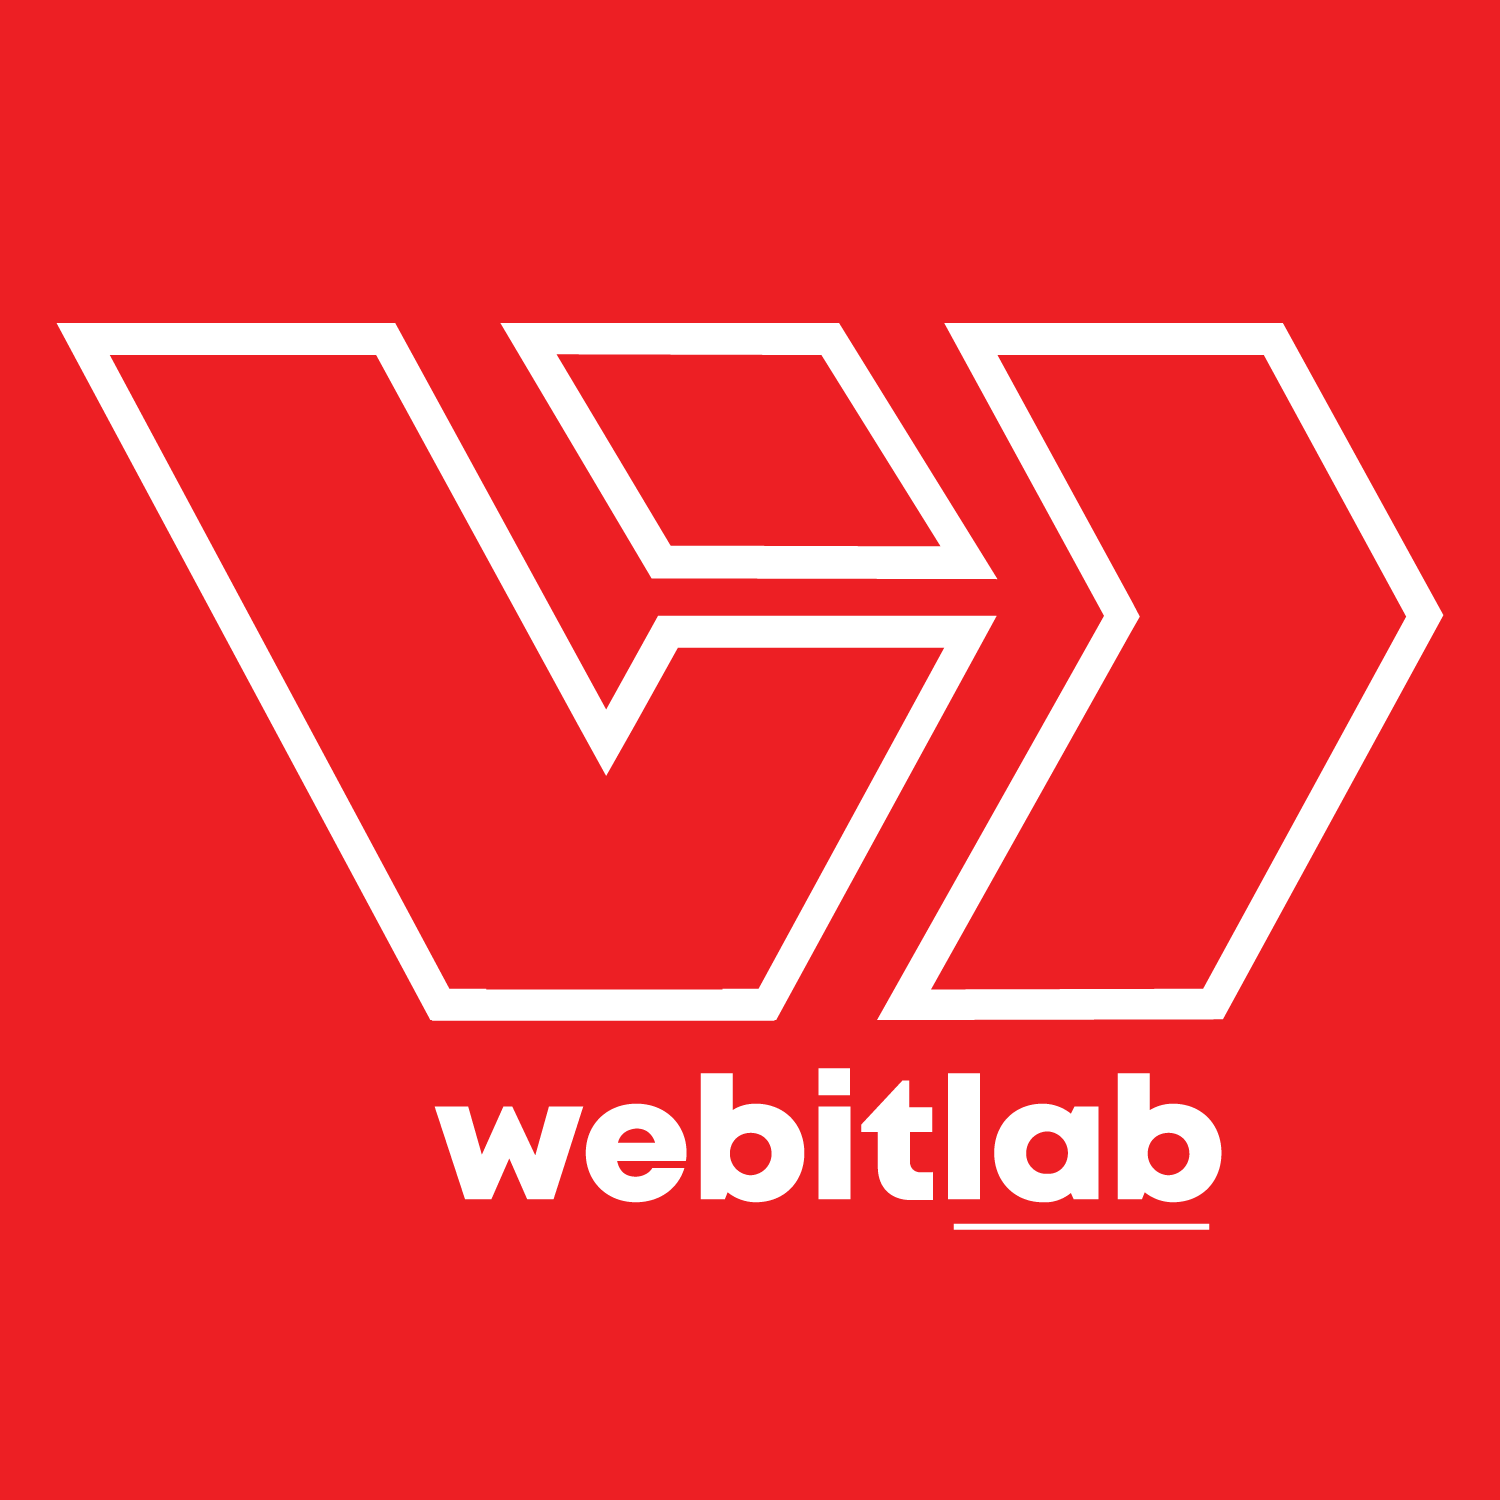 webitlab